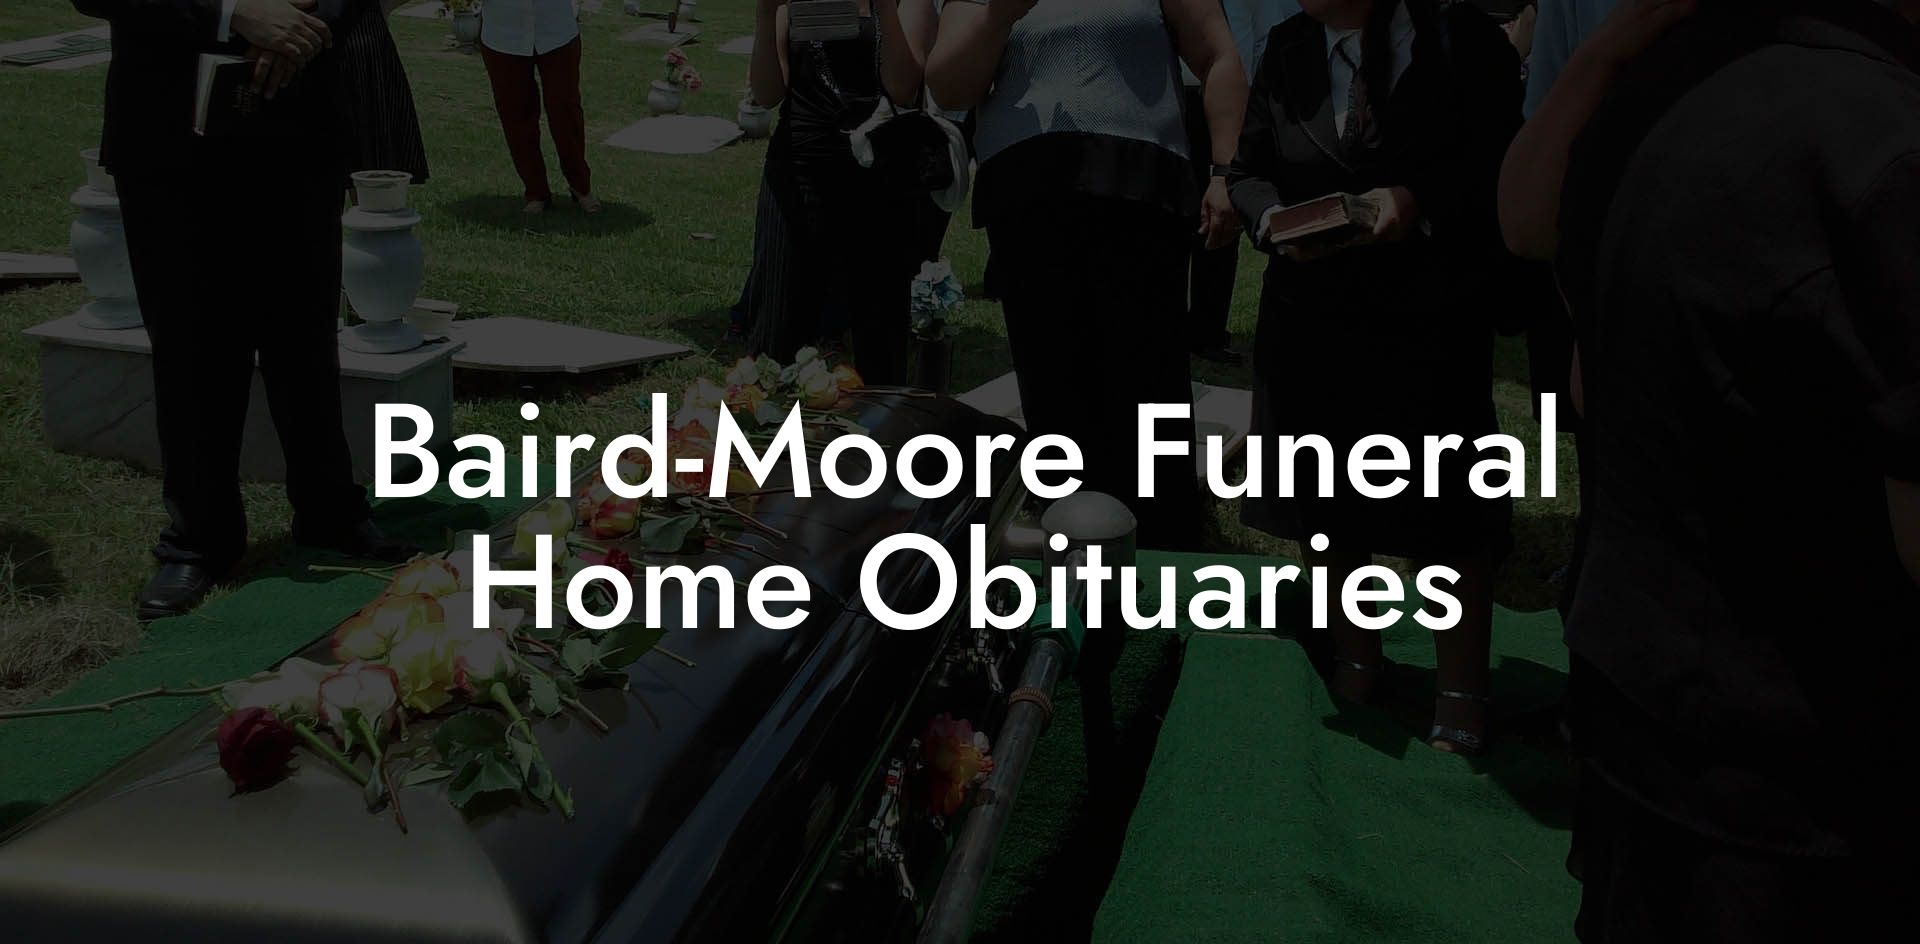 Baird-Moore Funeral Home Obituaries